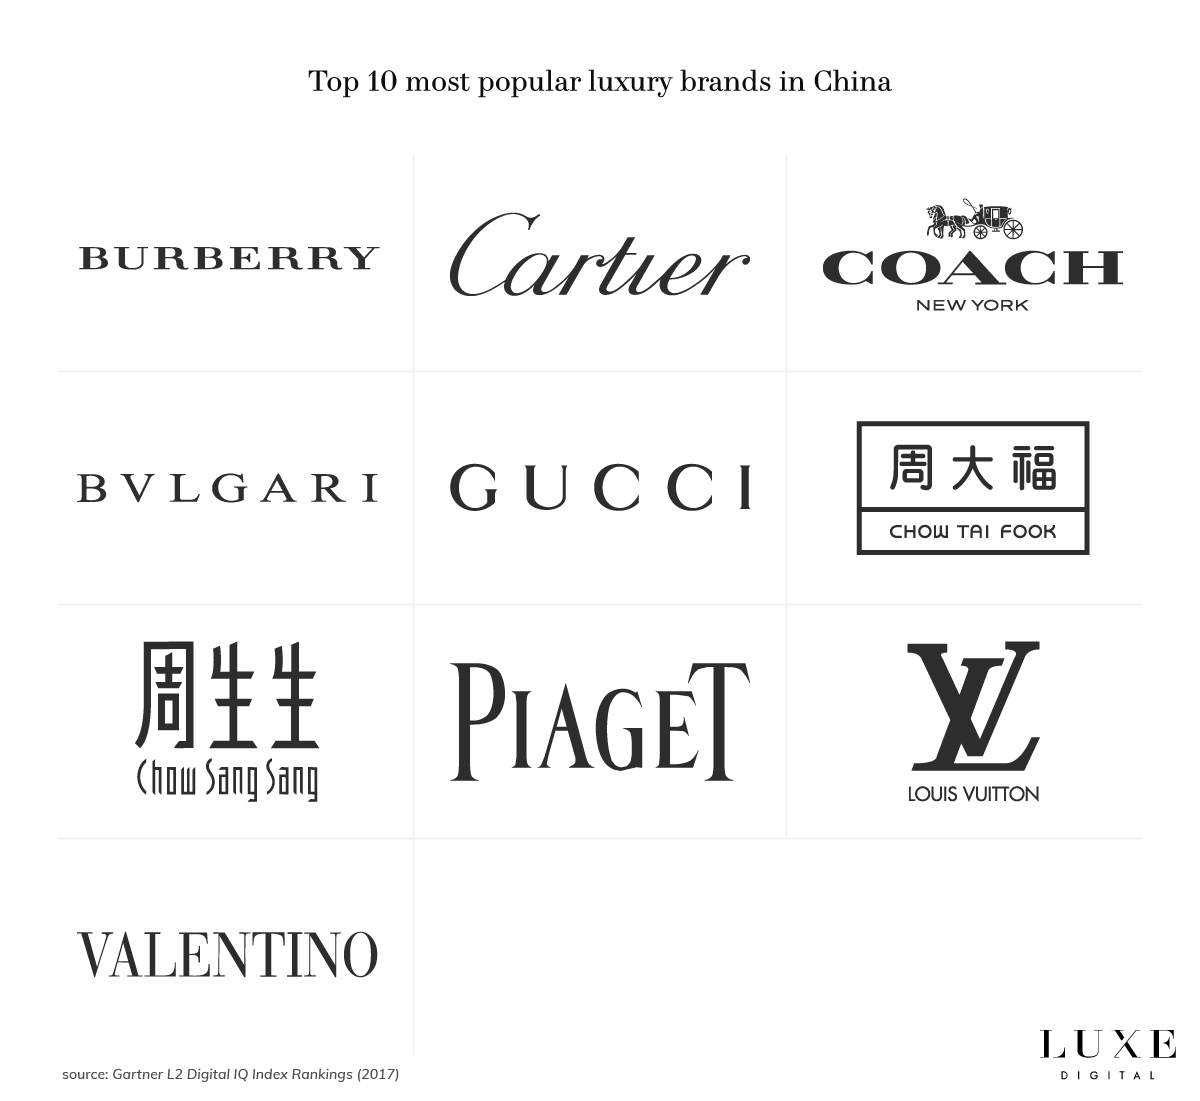 Luxe Digital top luxury brands China 2018